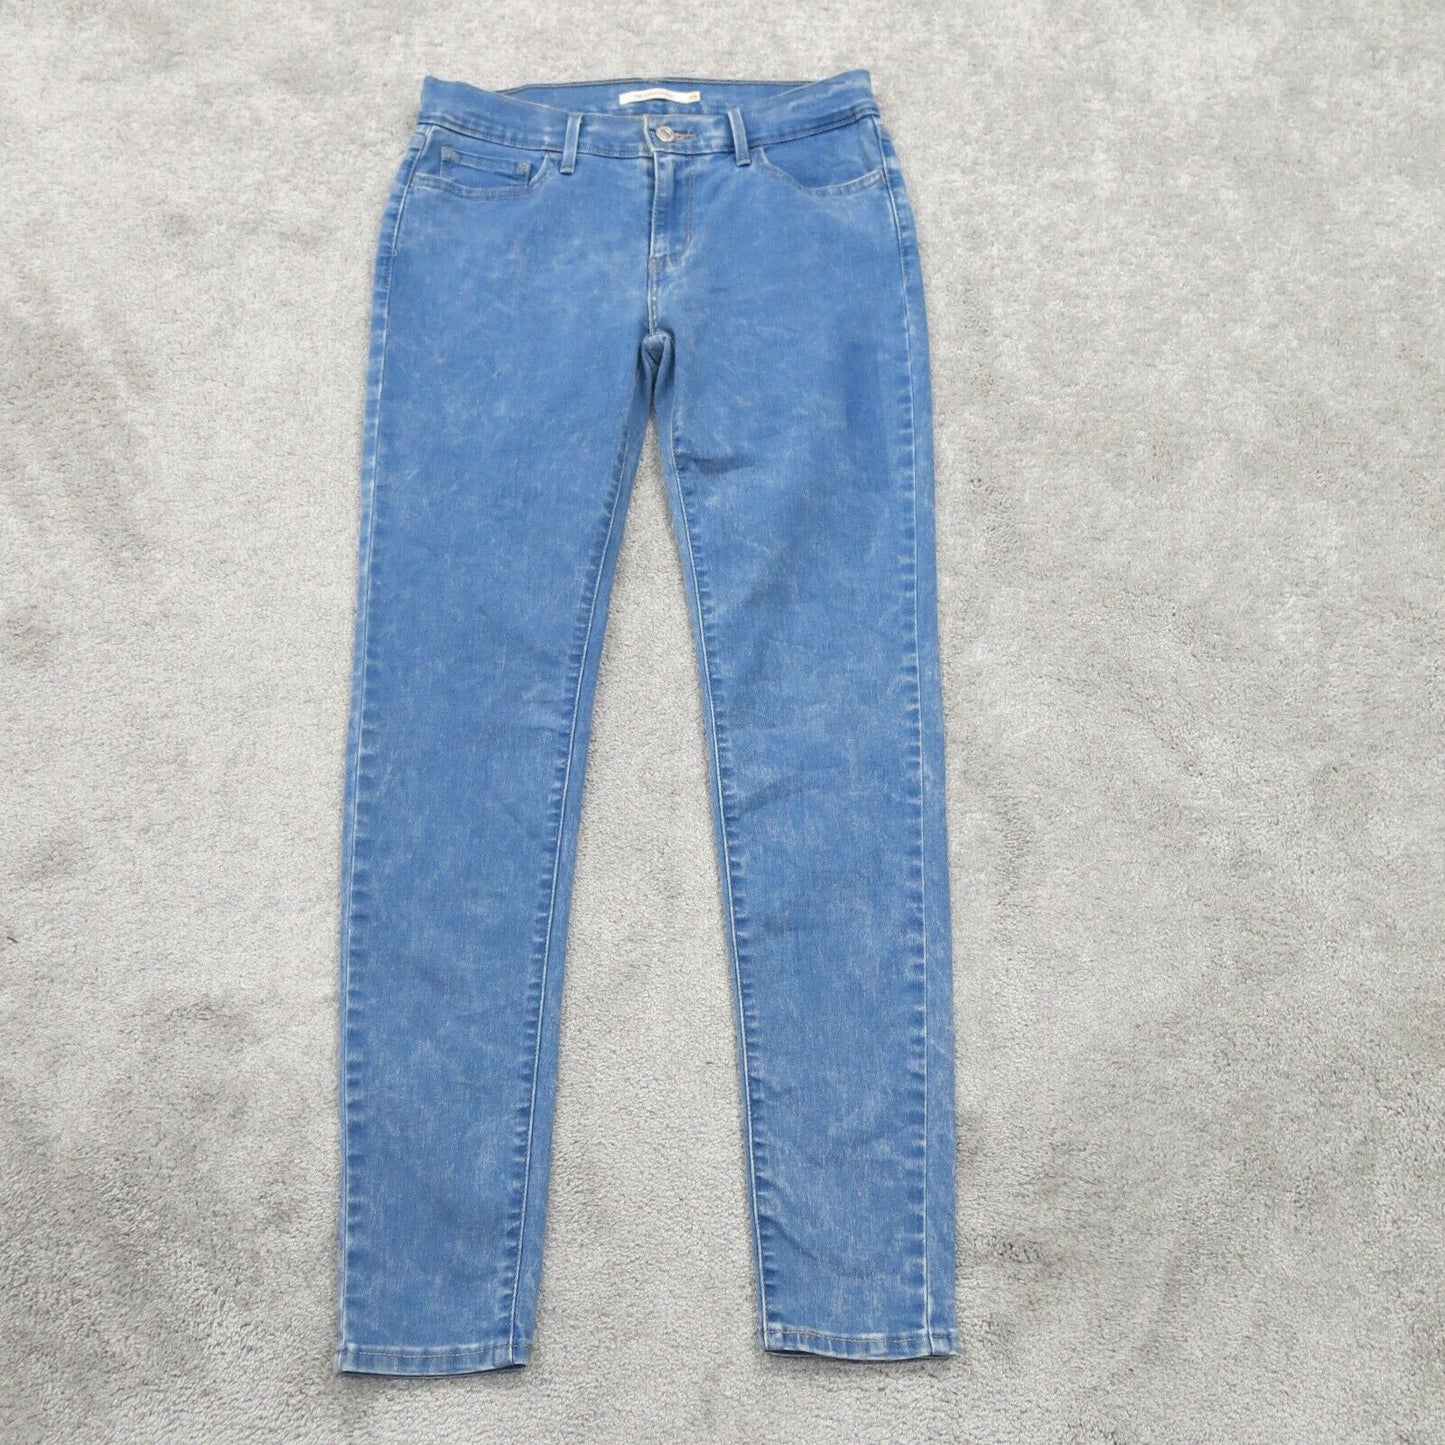 Levis Women Classic Fit Skinny Jeans Denim Stretch Mid Rise Blue Size W29 X L30